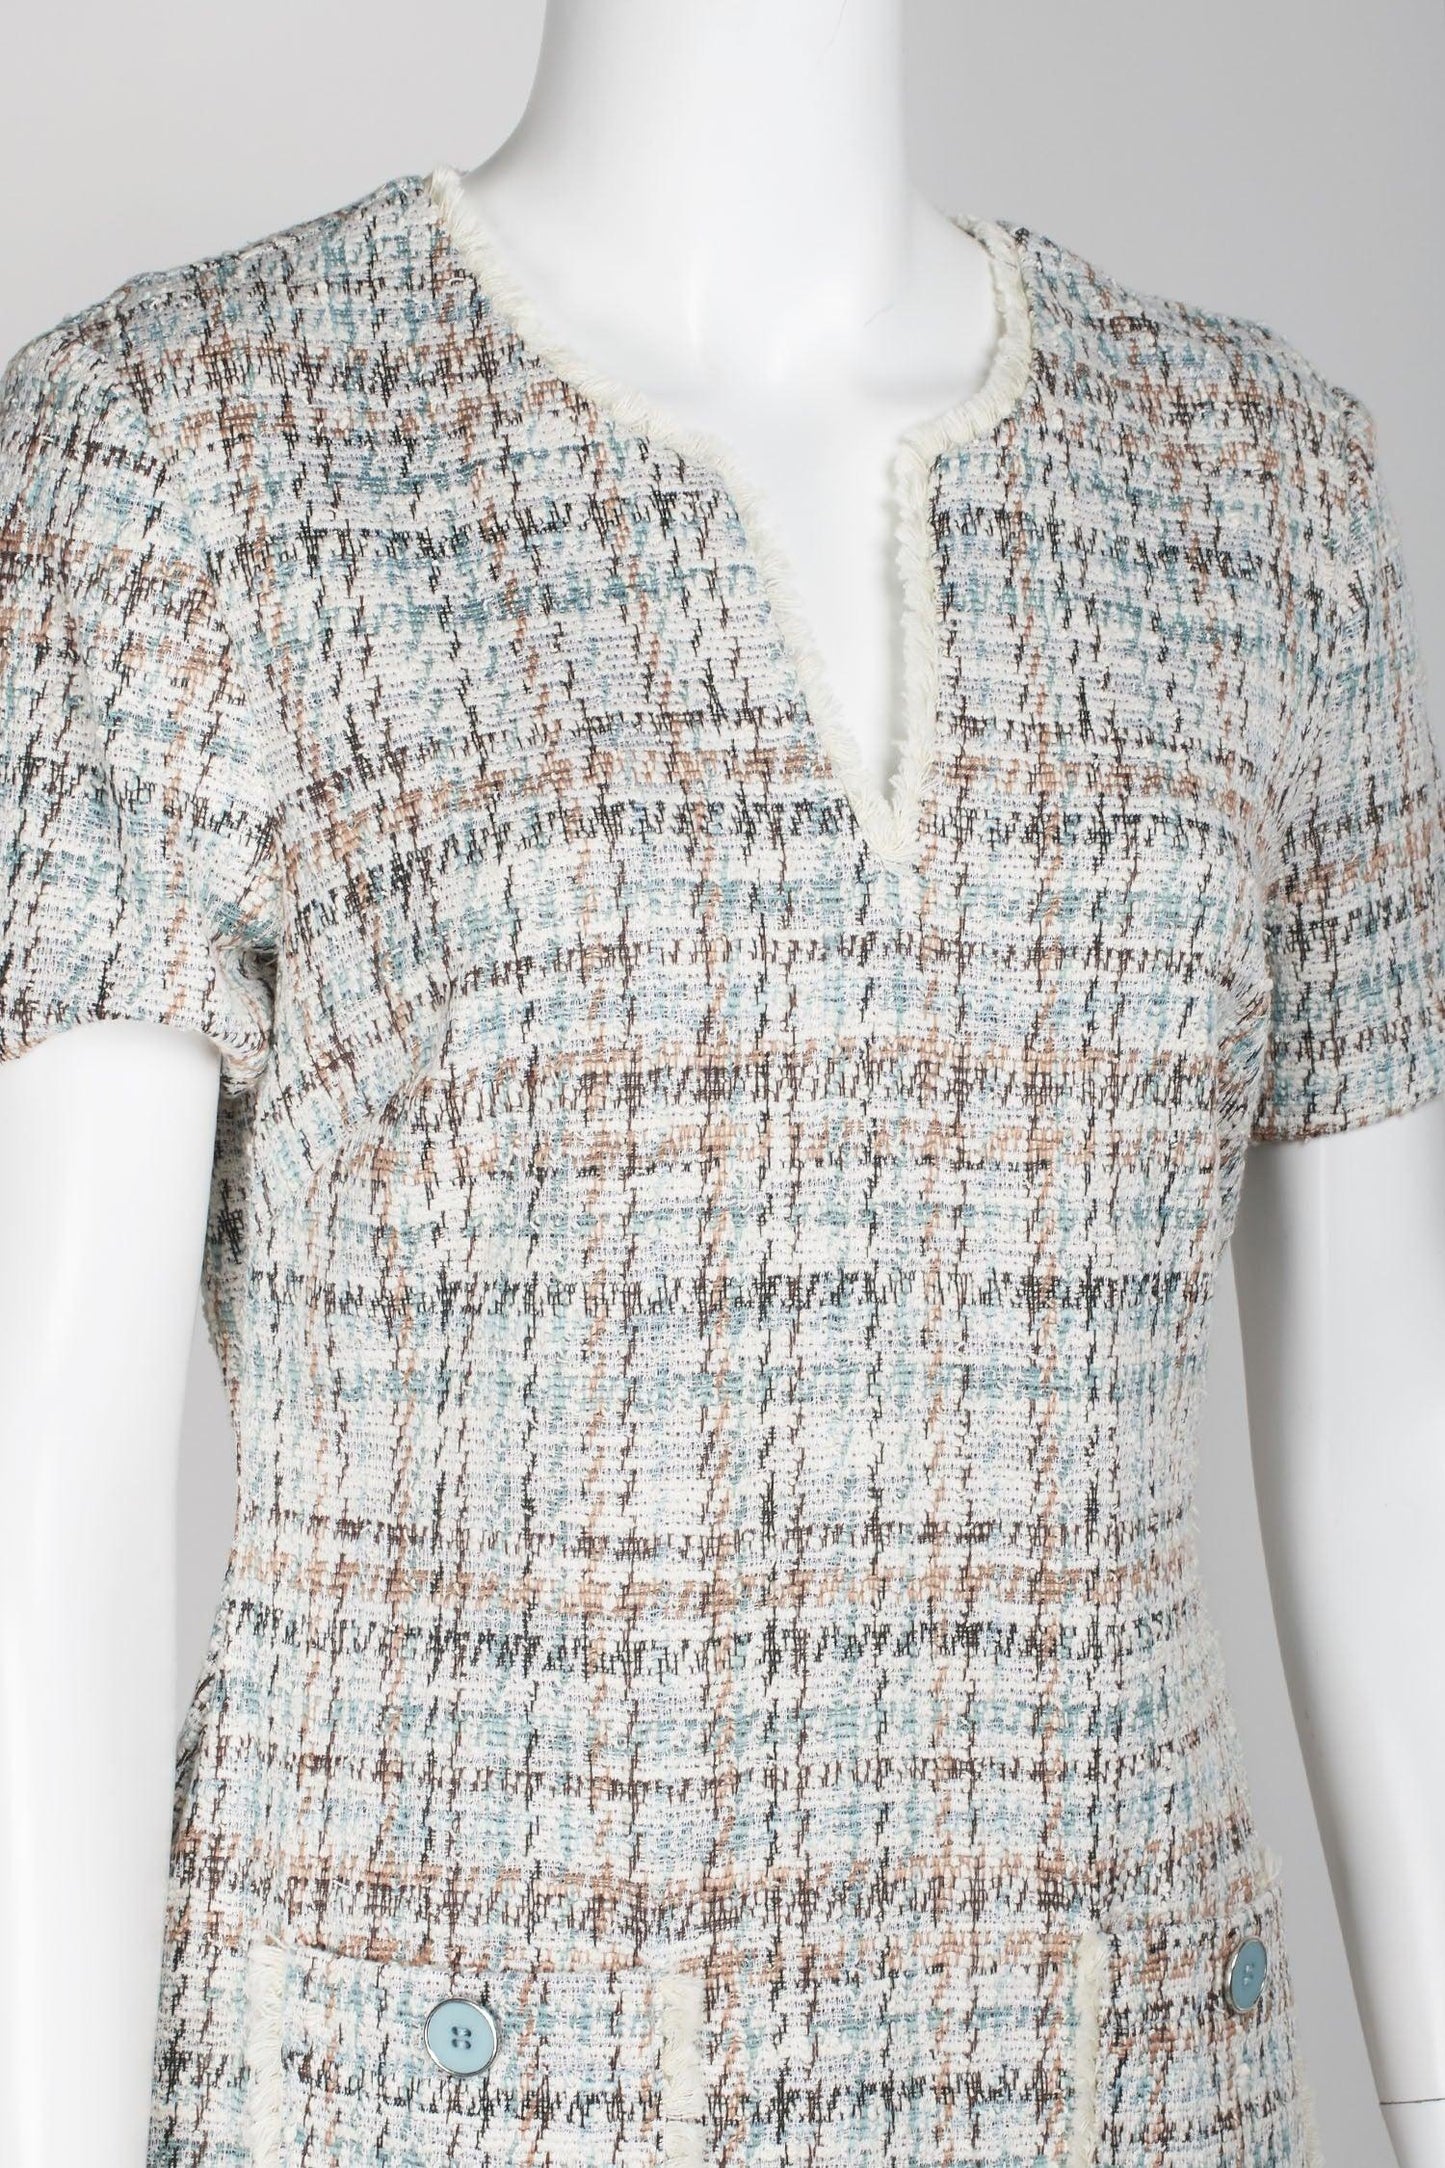 Connected Apparel Short Sleeve Pocket Knit Dress - The Dress Outlet